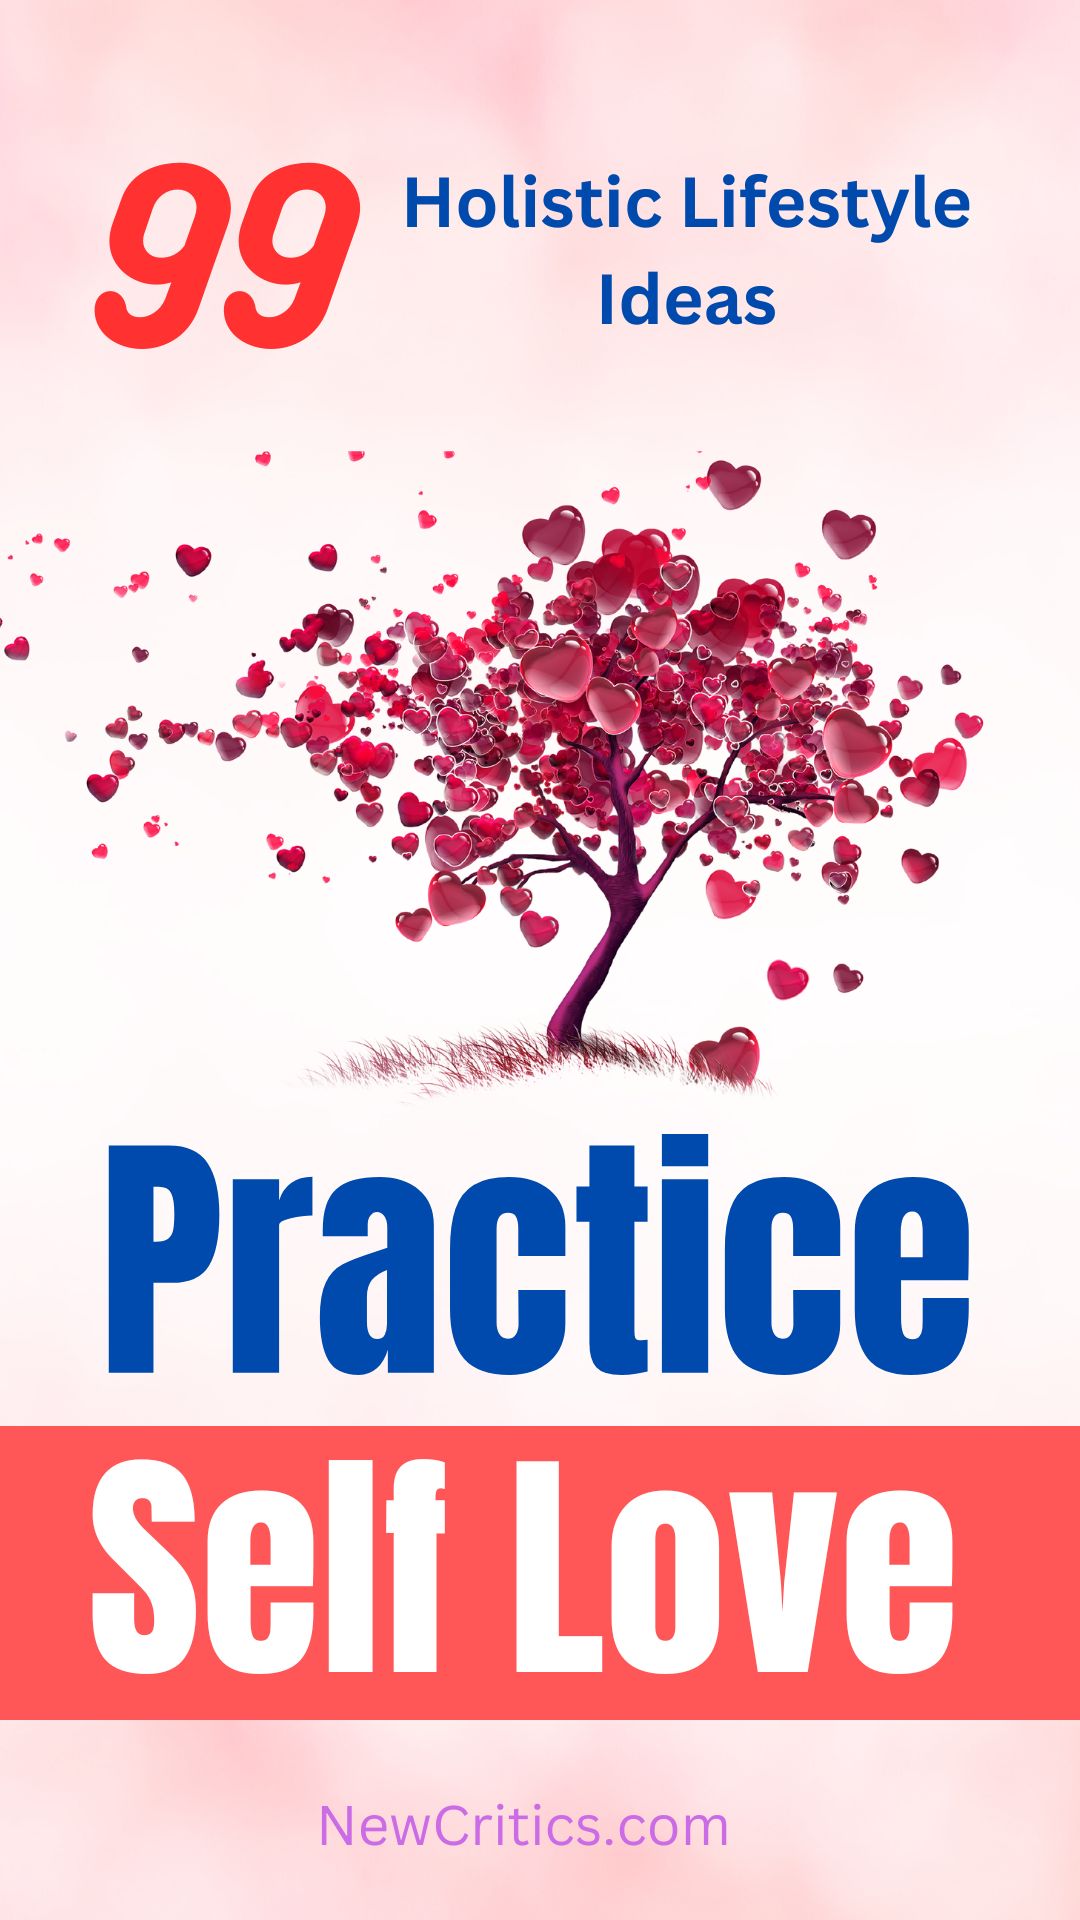 Practice Self Love / Canva